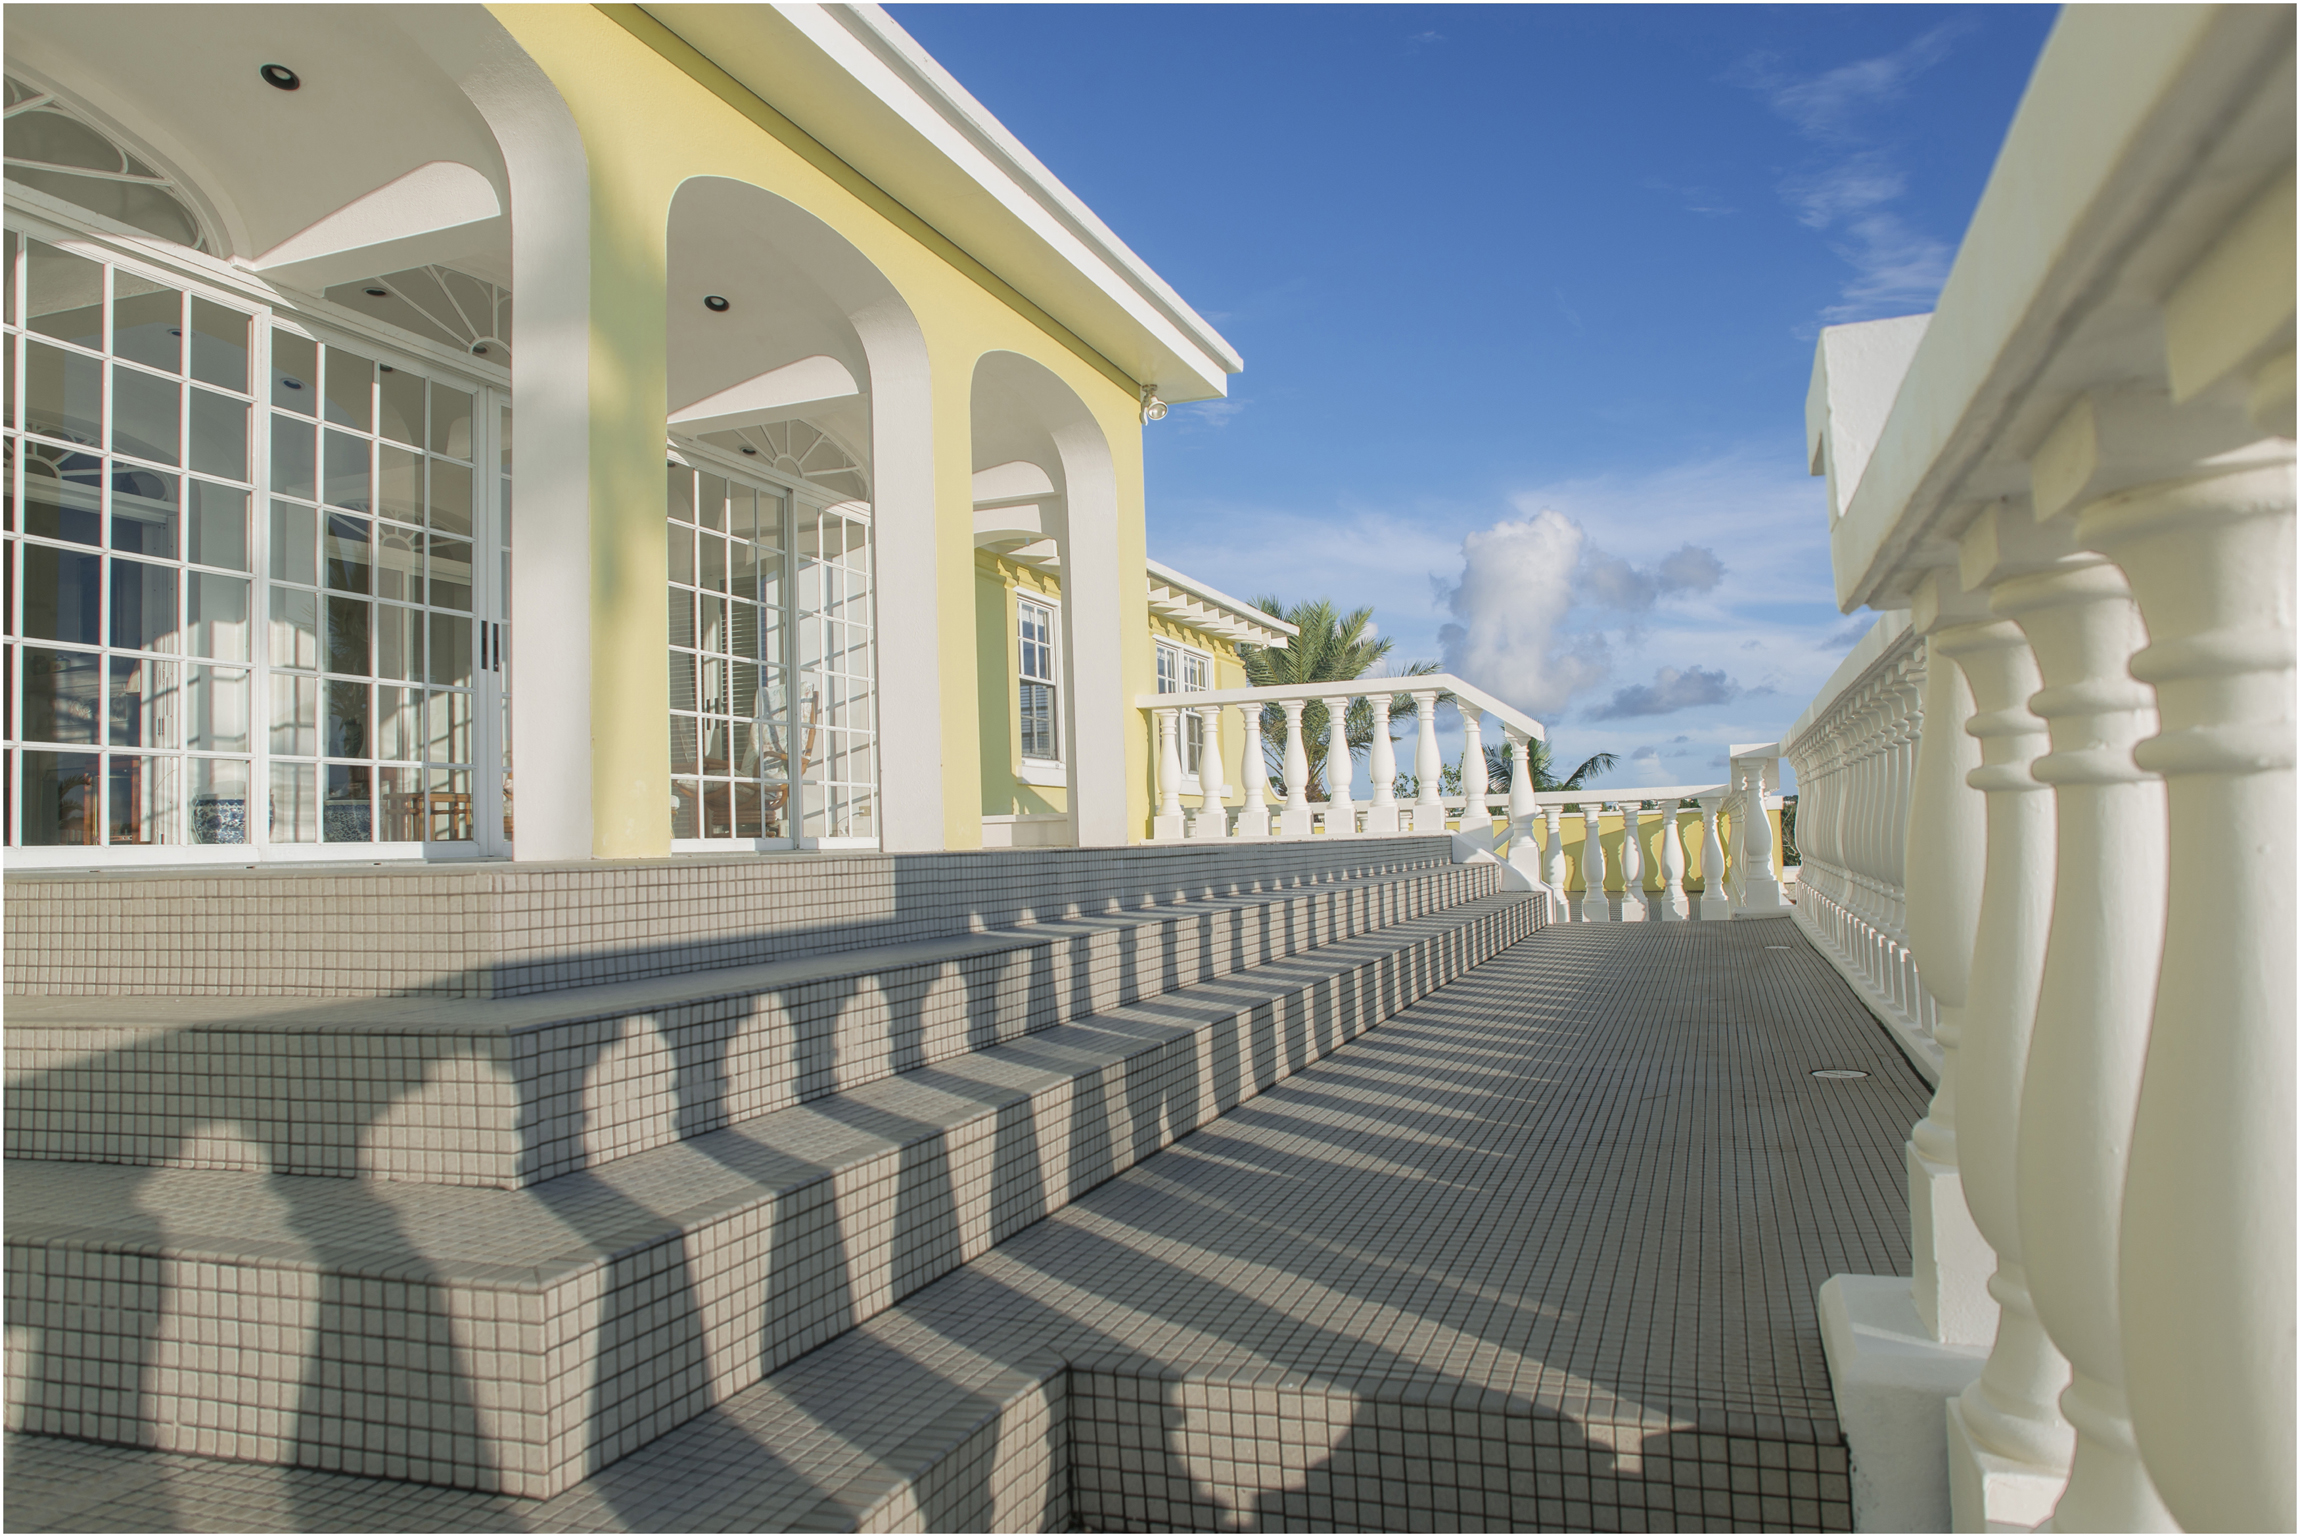 ©FianderFoto_Architecture_Bermuda_Palomera_012.jpg